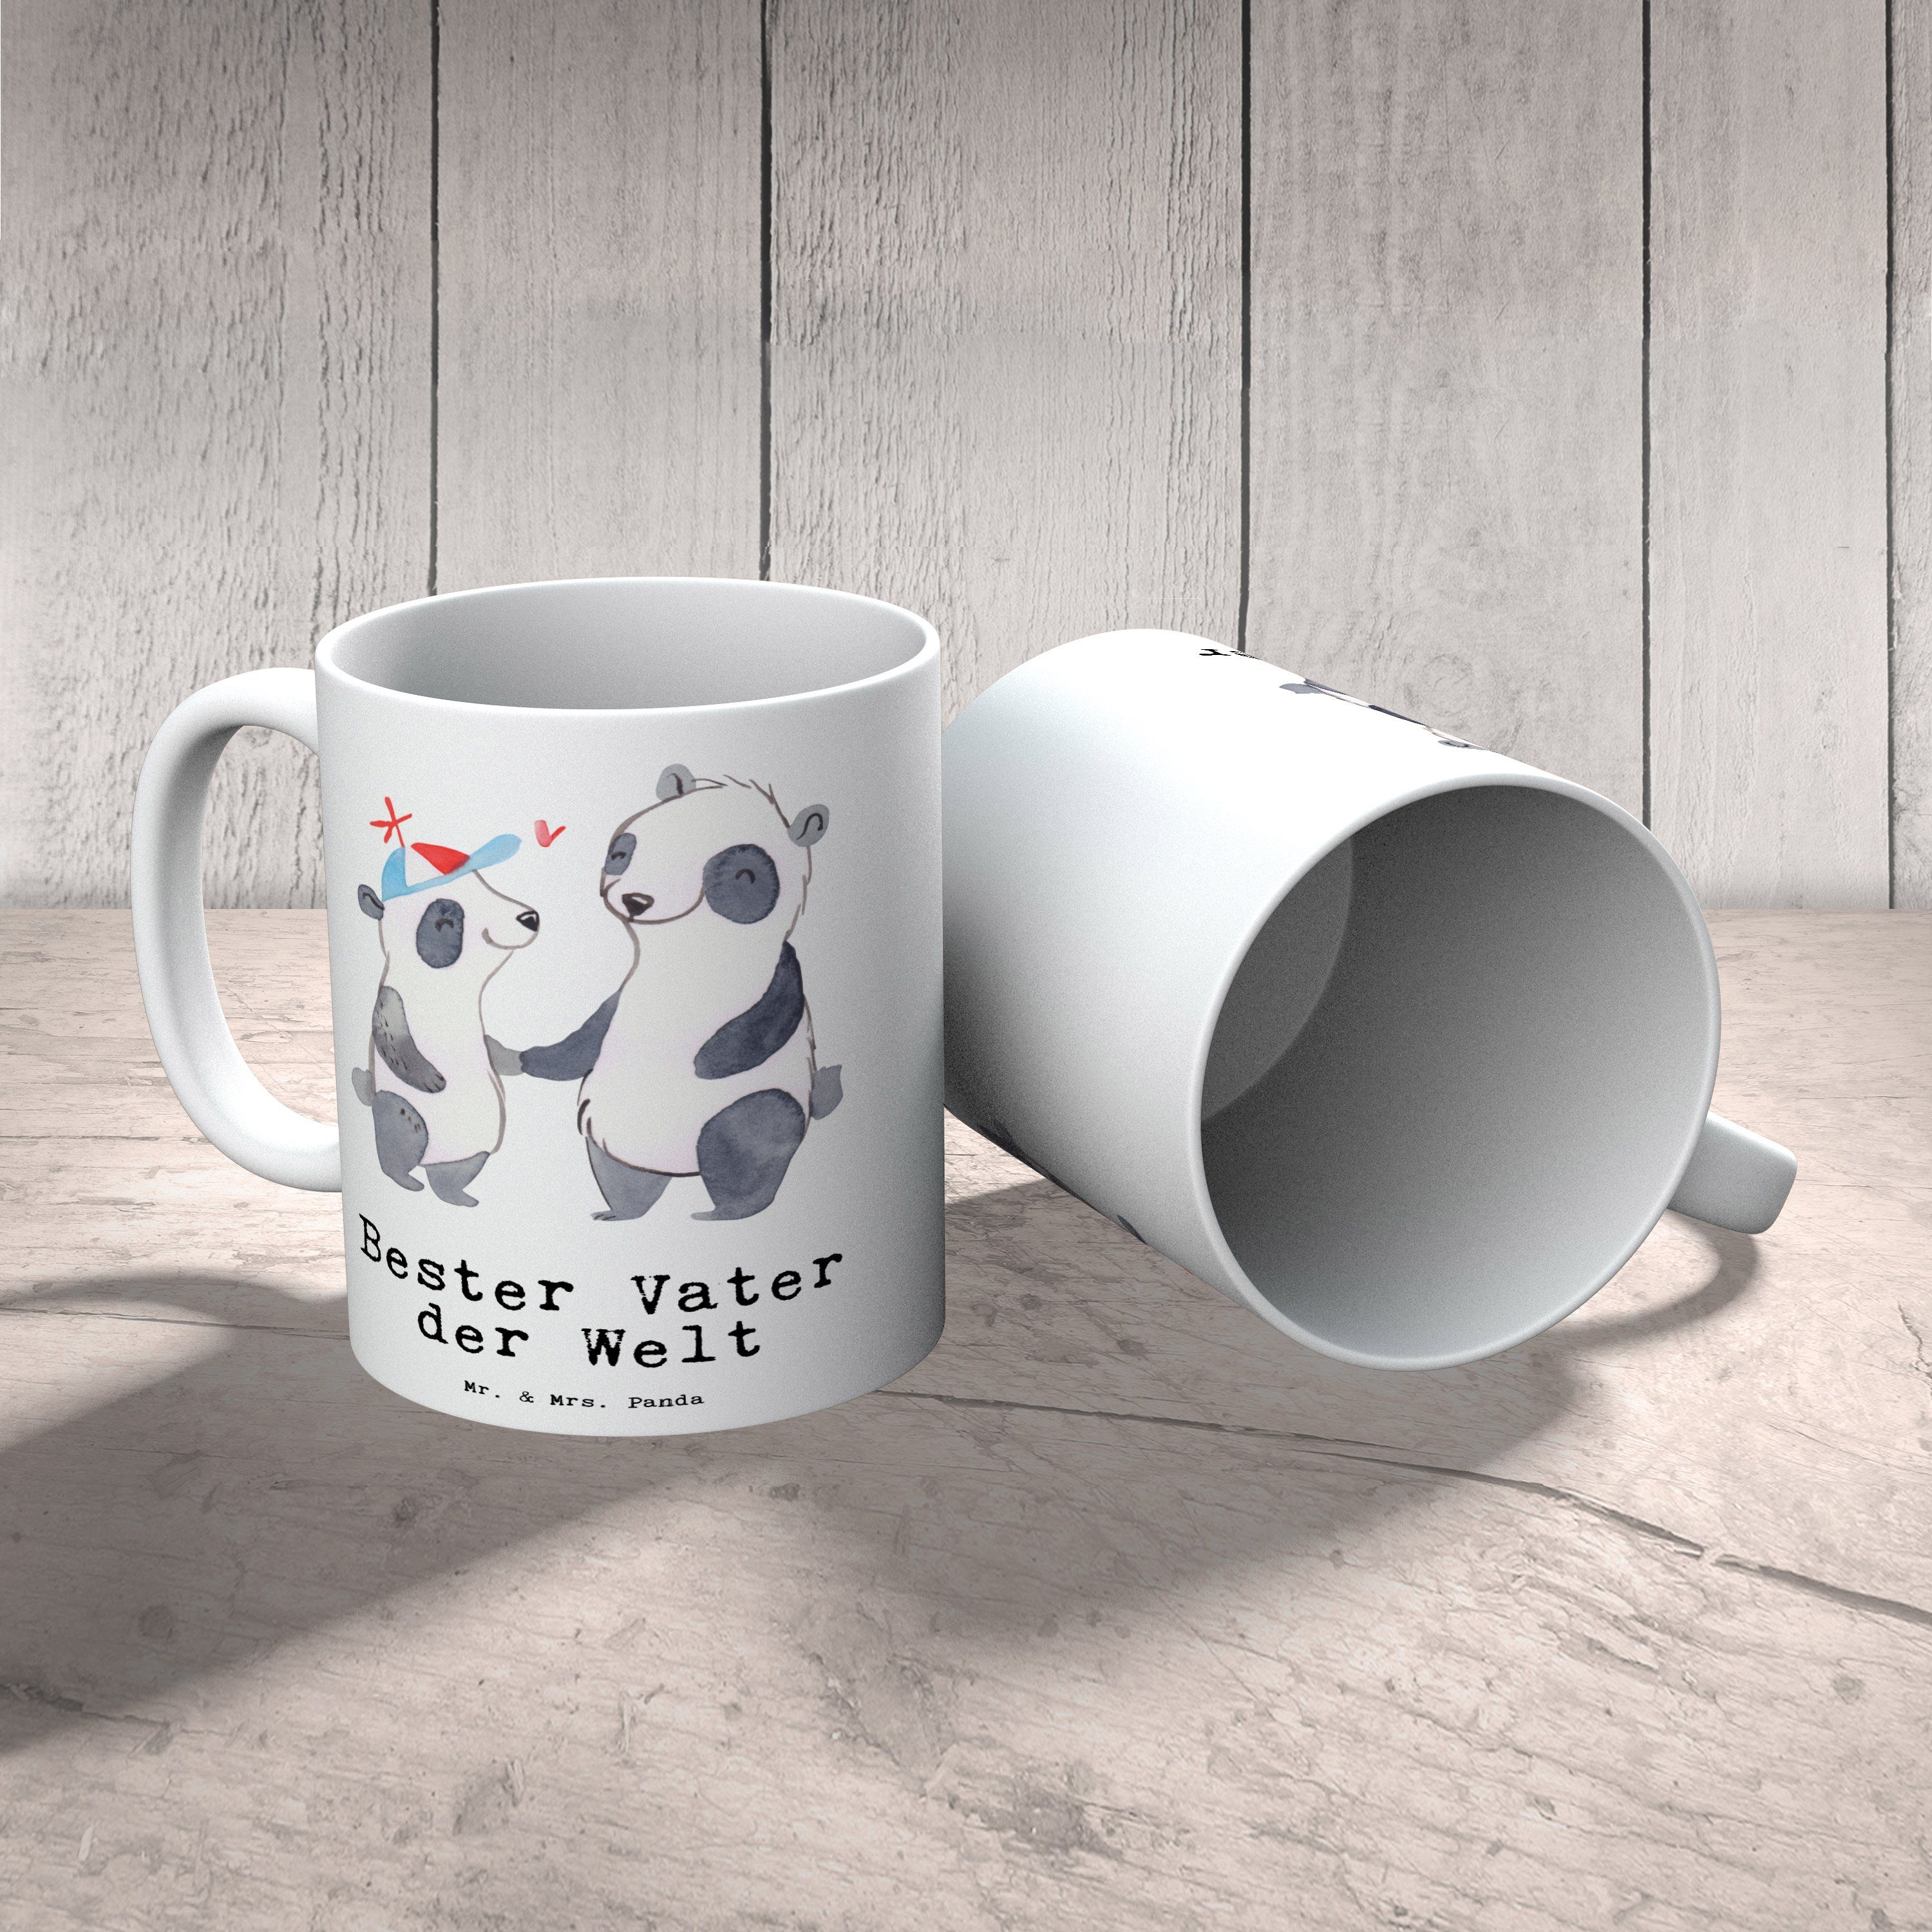 Mr. & Mrs. Panda Vater Kaffeetasse, Dankeschön, Tasse der Familie, Tee, Geburtstag, Weiß Panda Welt Bester Vater, Geschenk, Geschenk Kaffeebecher, Becher, - Bedanken, Büro, - Keramik